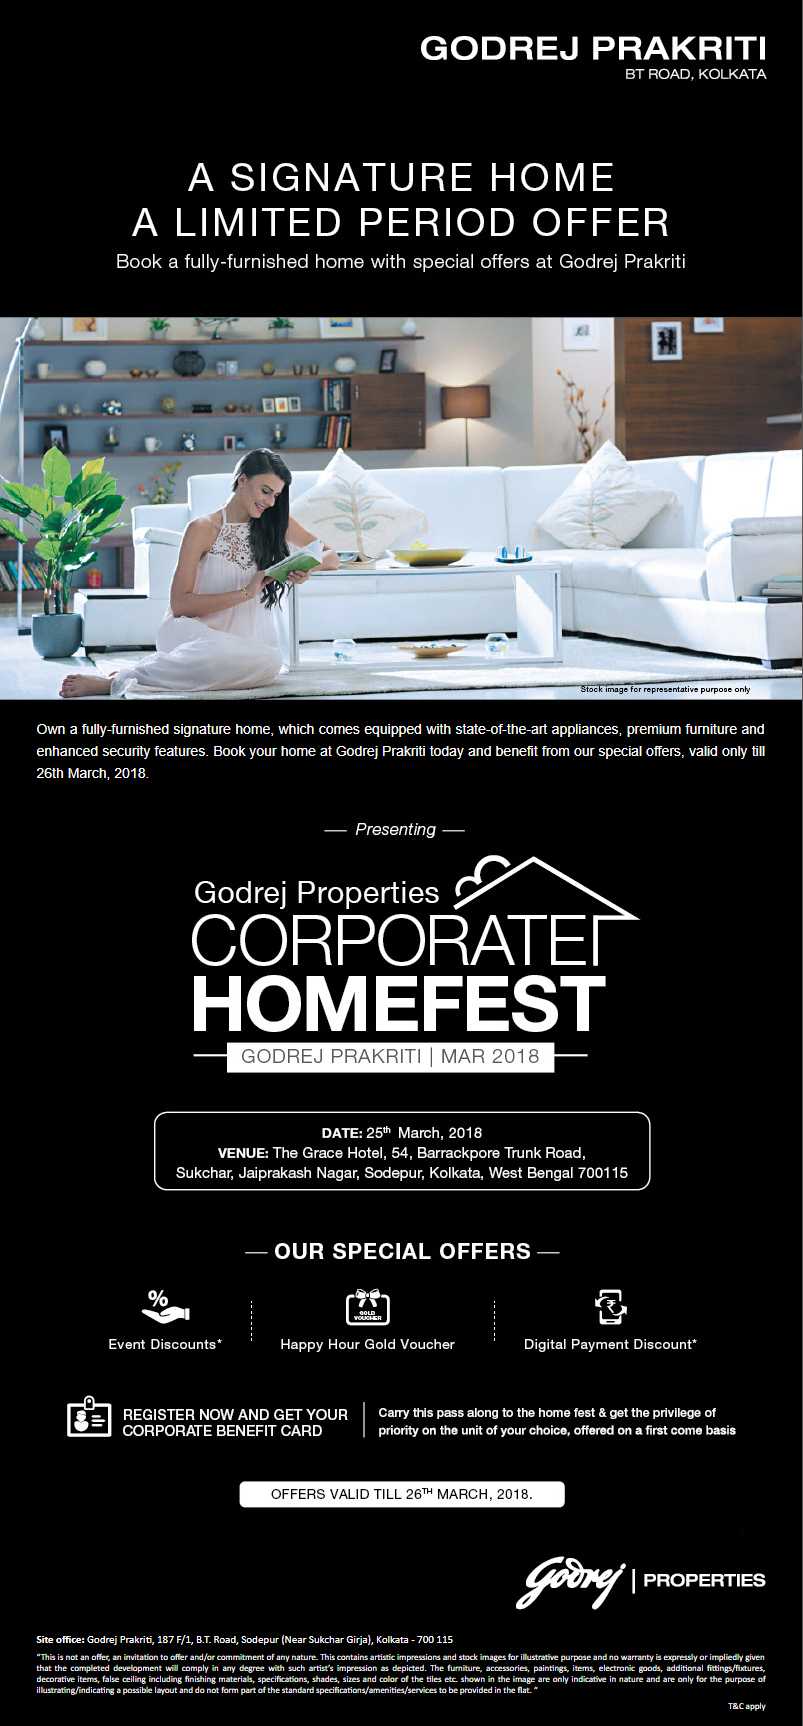 Presenting Godrej Properties Corporate Homefest in Kolkata Update